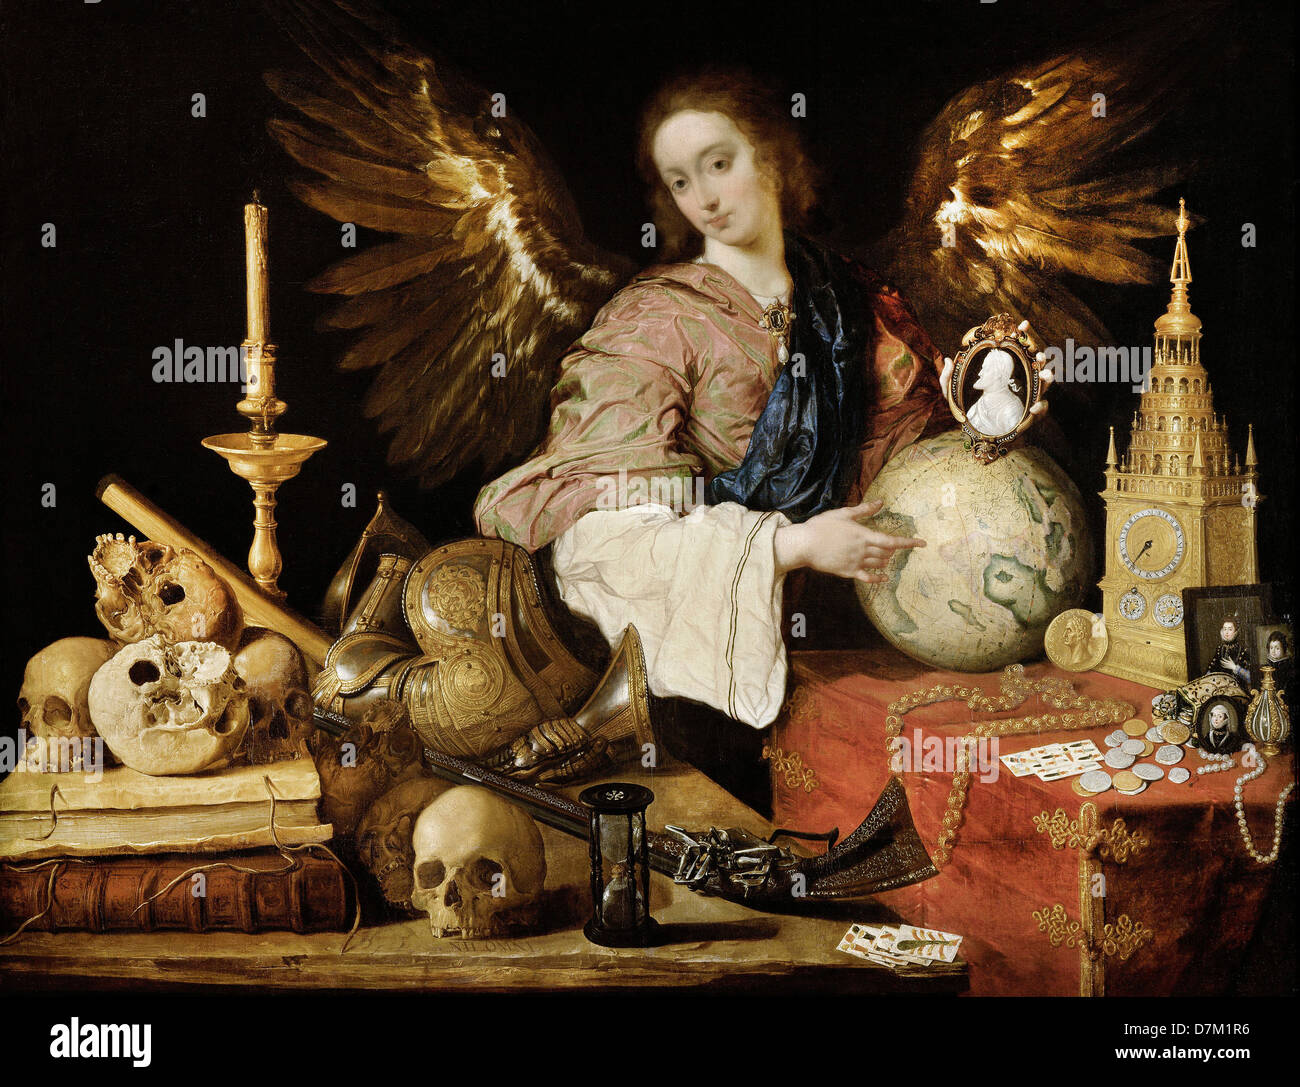 Antonio de Pereda, Allegory of Vanity 1632-1636 Oil on canvas. Kunsthistorisches Museum, Vienna, Austria Stock Photo